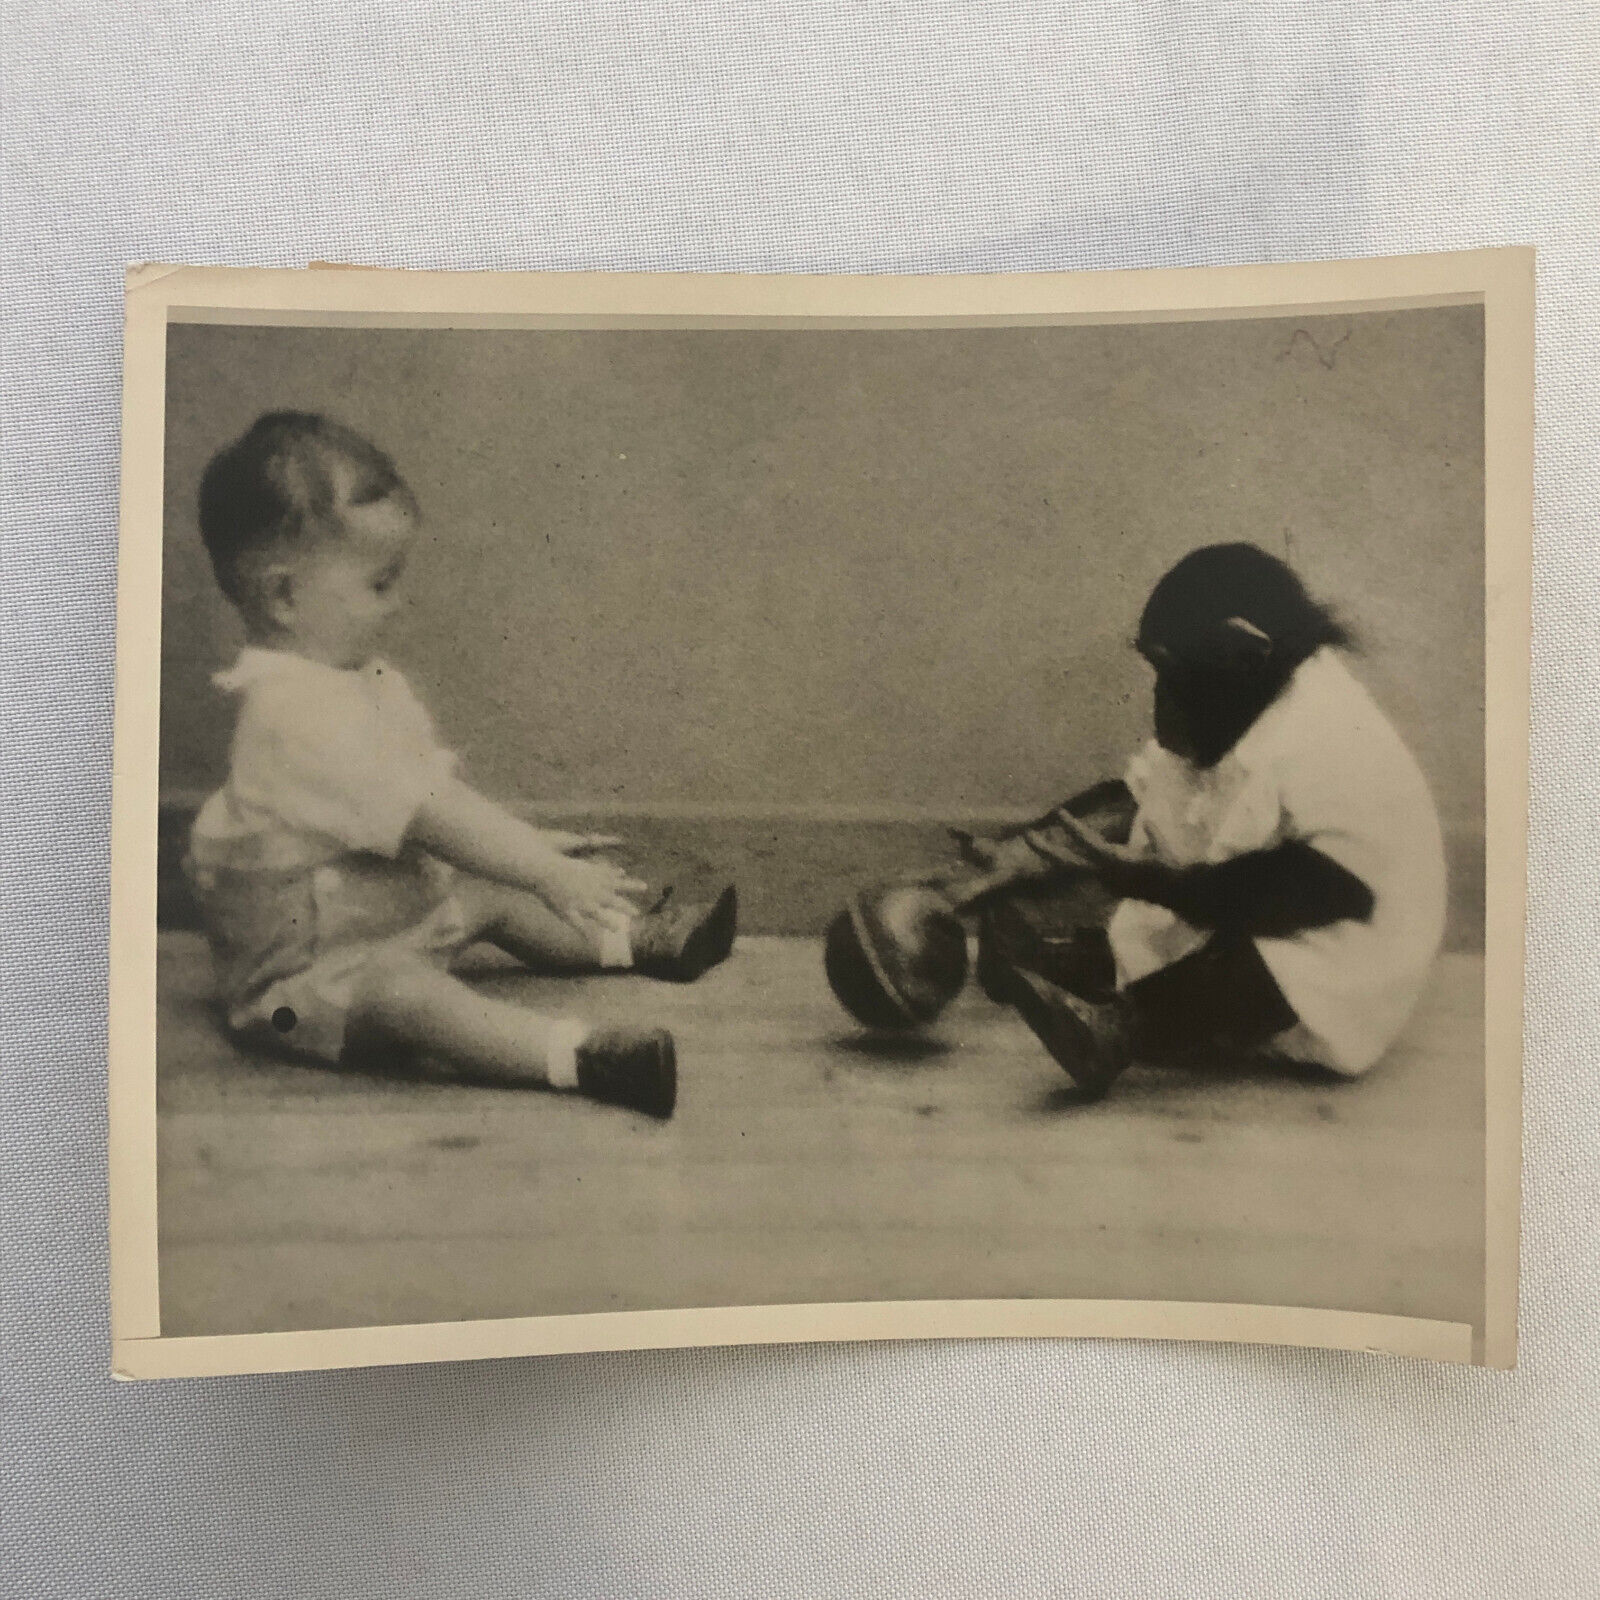 Press Photo Photograph Child and Chimpanzee Monkey Science Experiment Indiana